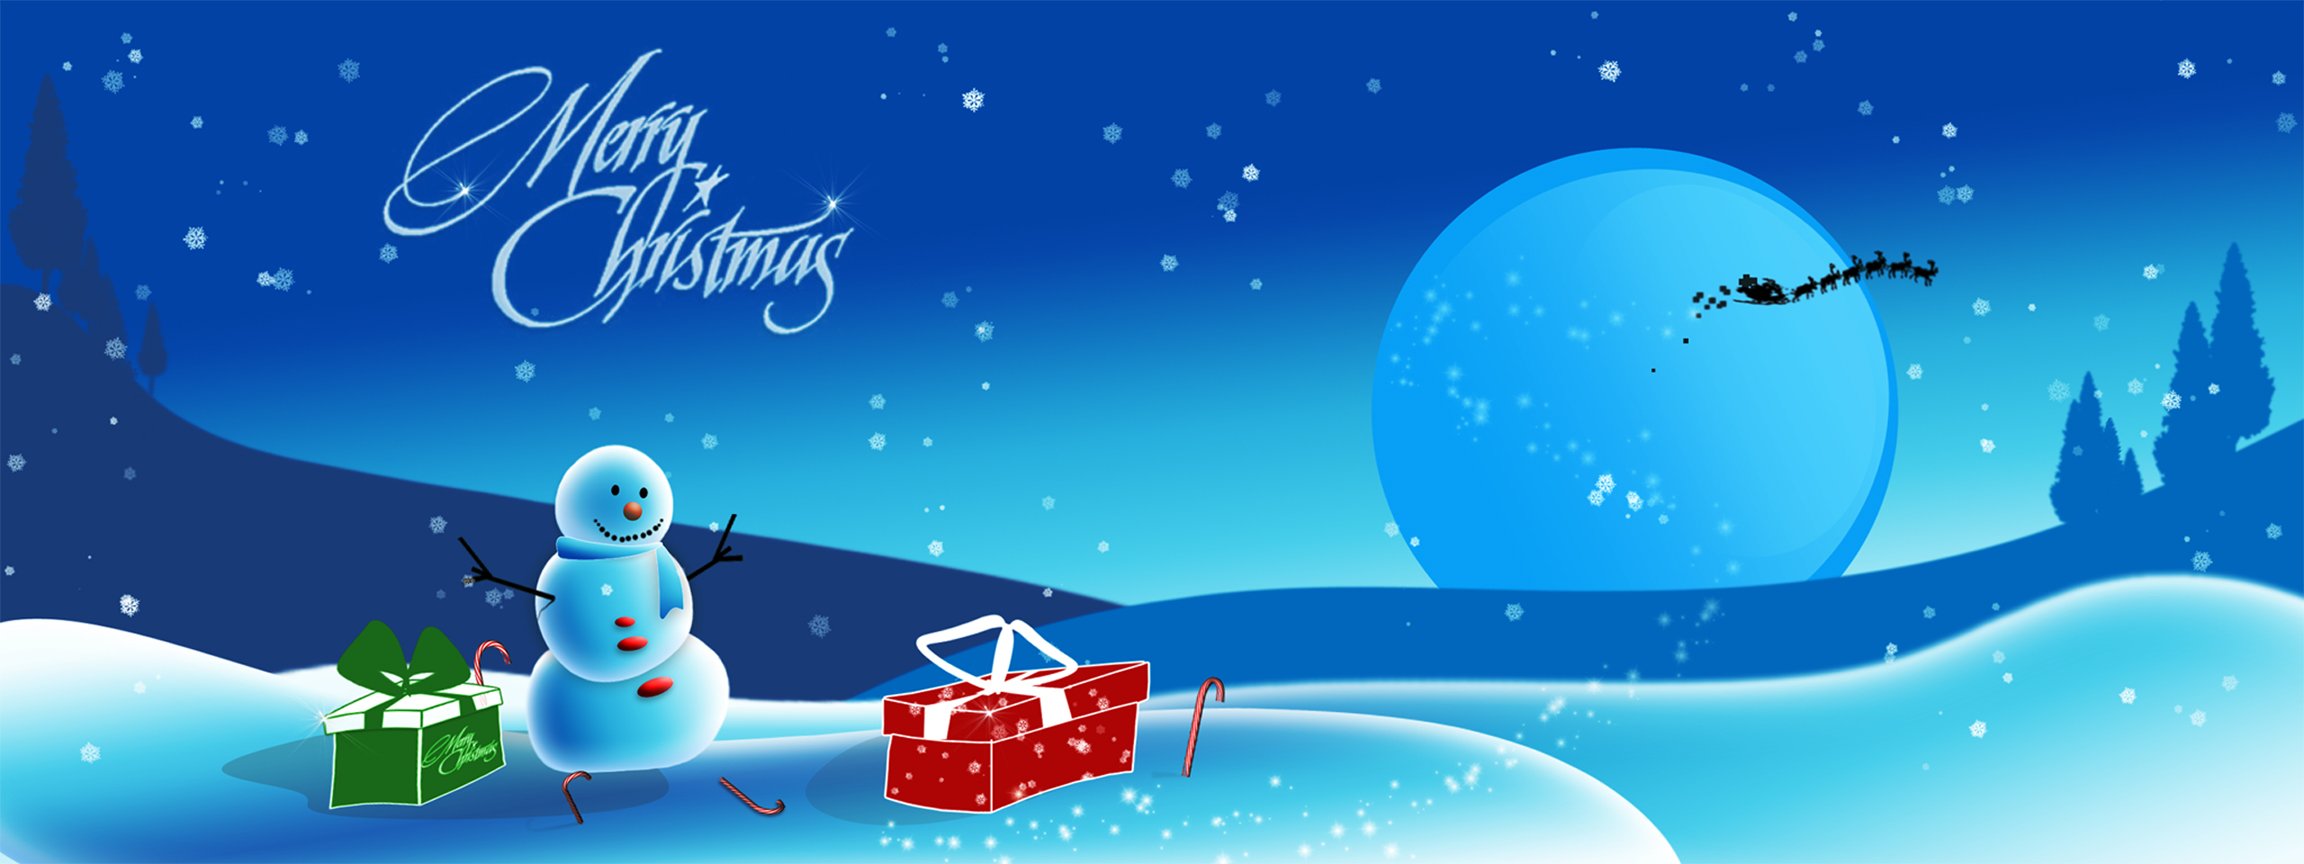 Free HD Christmas Wallpapers Desktop Backgrounds 2016